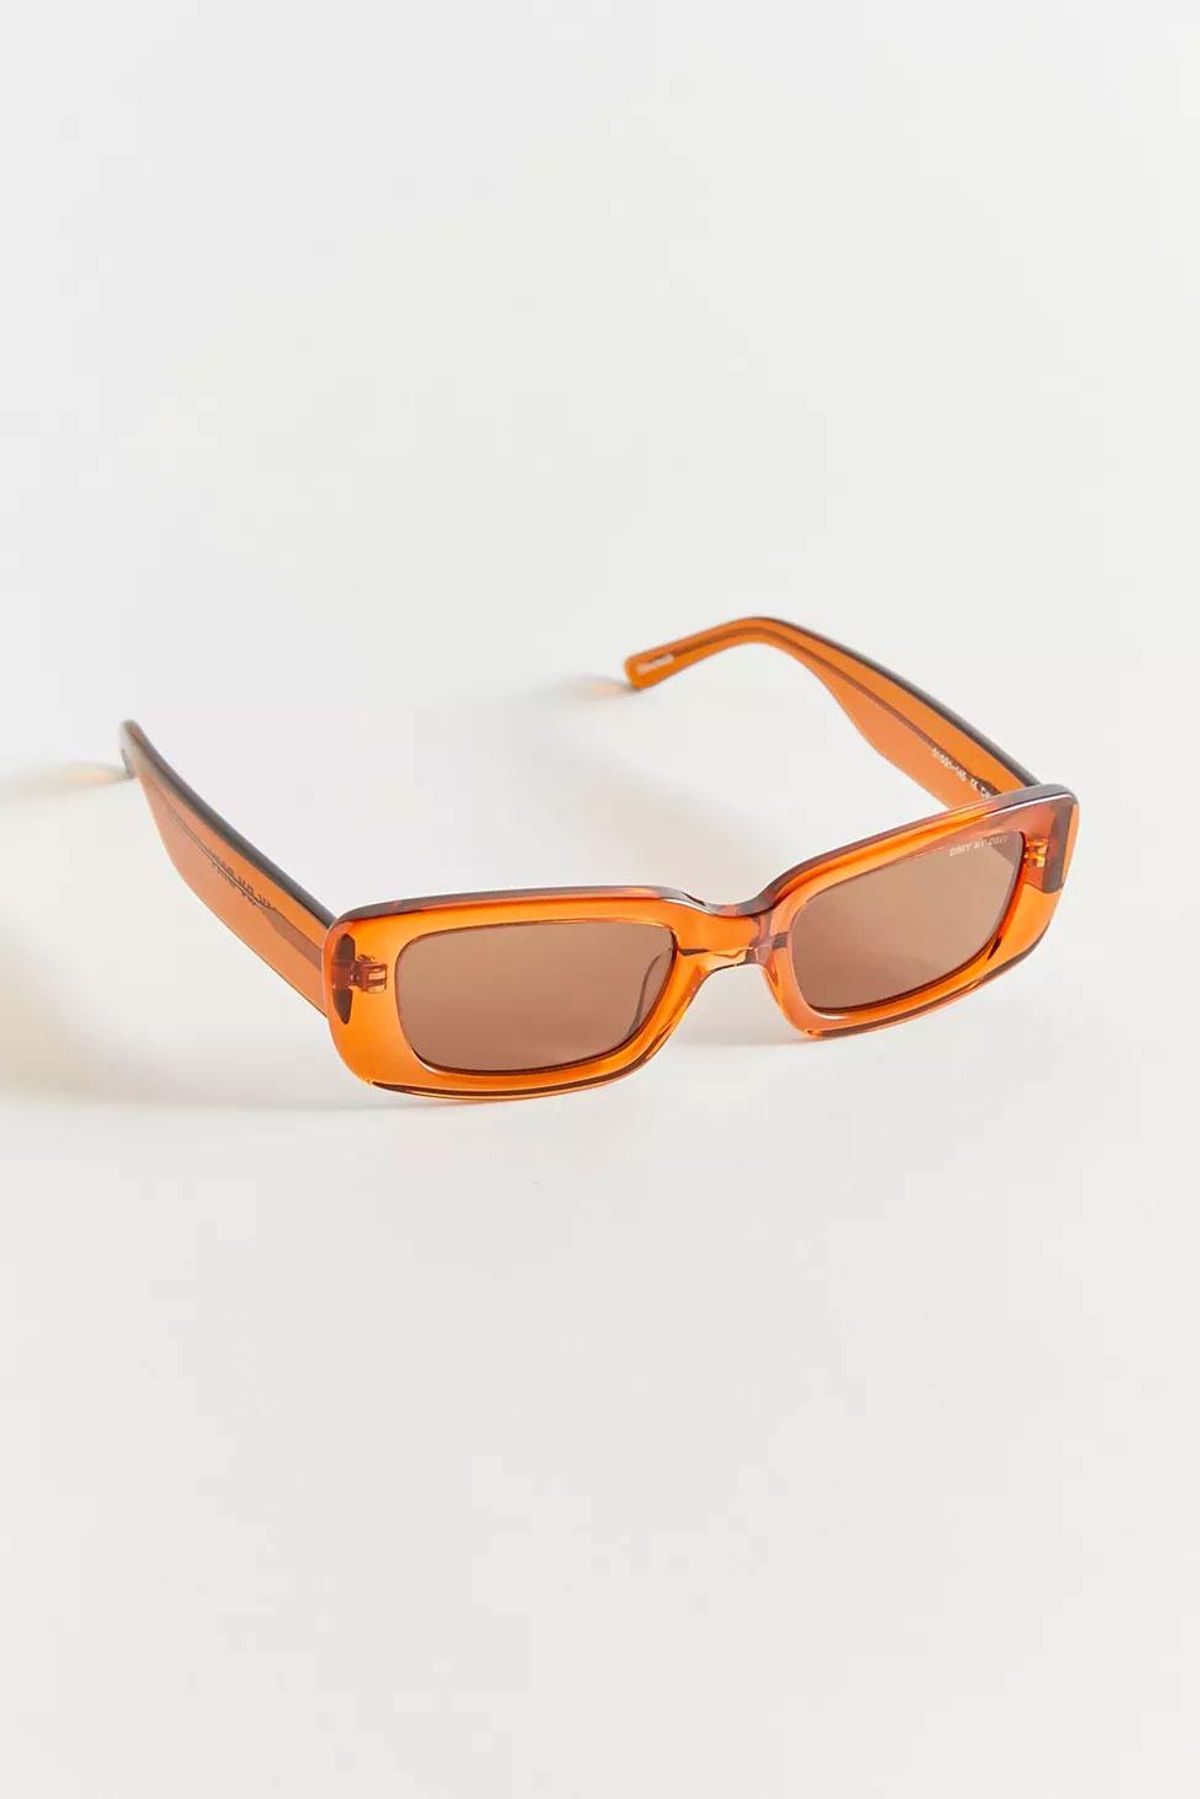 dmy by dmy preston rectangle sunglasses